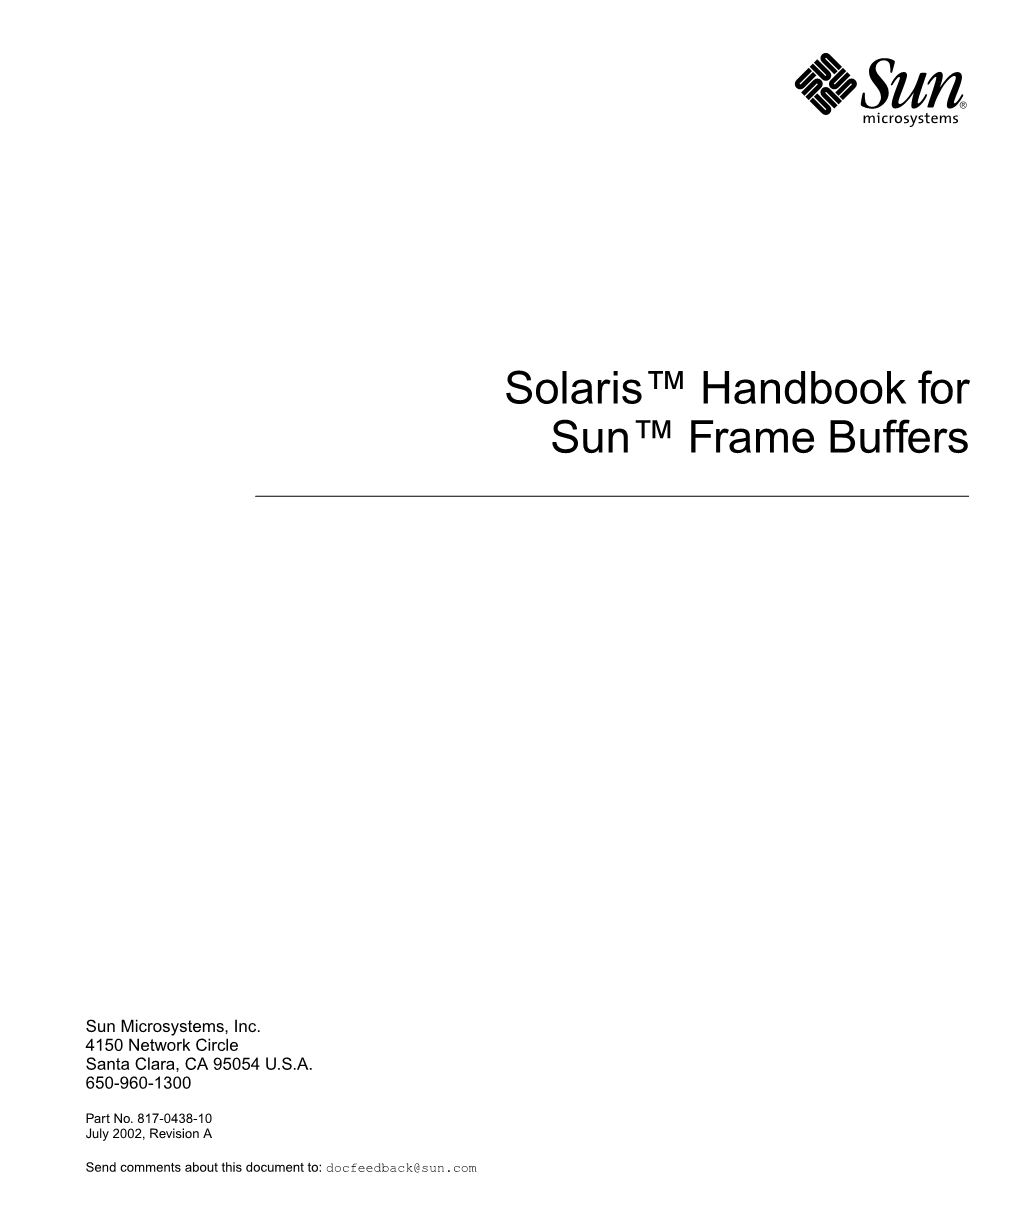 Solaris Handbook for Sun Frame Buffers